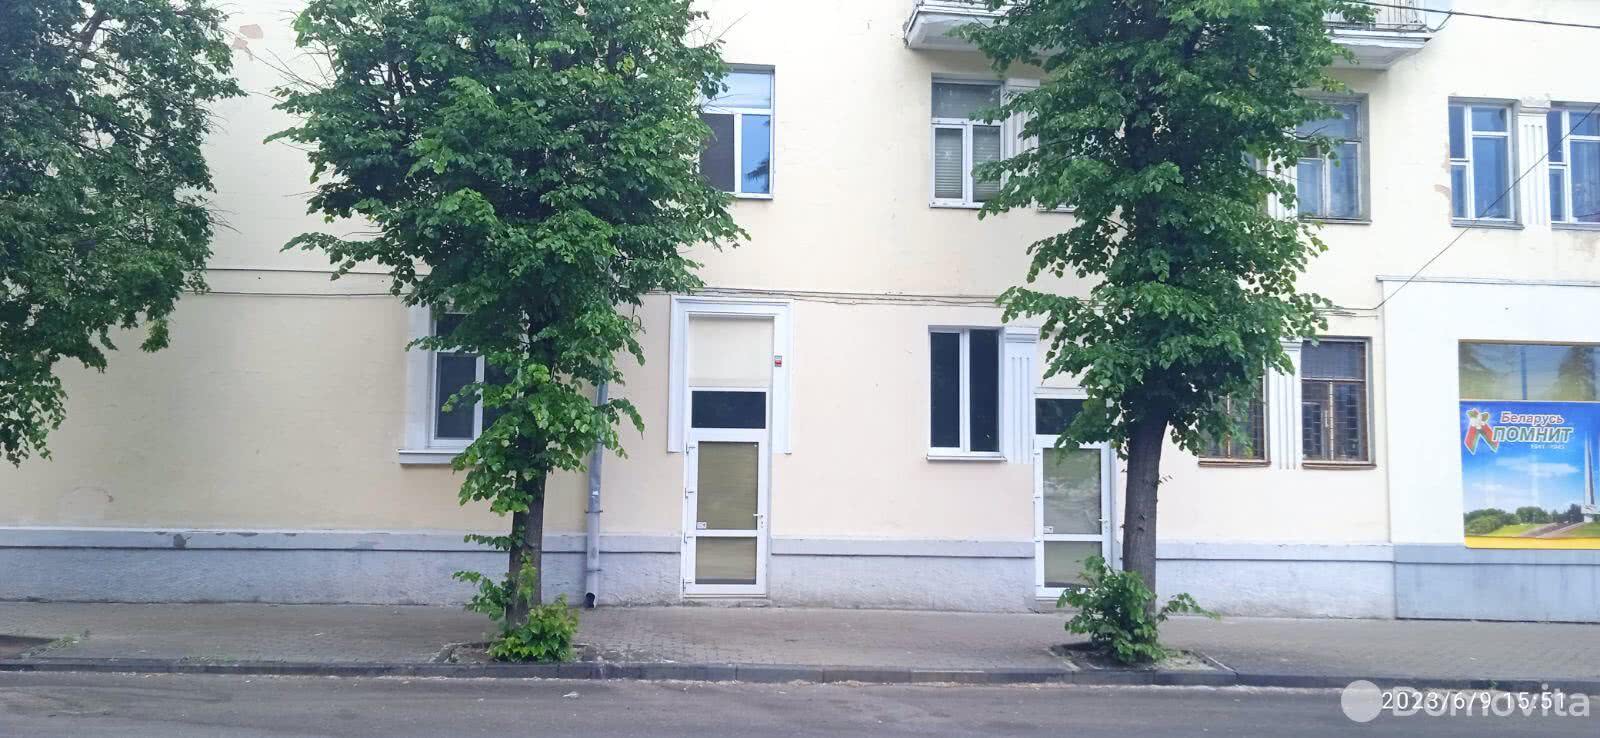 квартира, Витебск, ул. Ленина, д. 64, стоимость продажи 152 961 р.